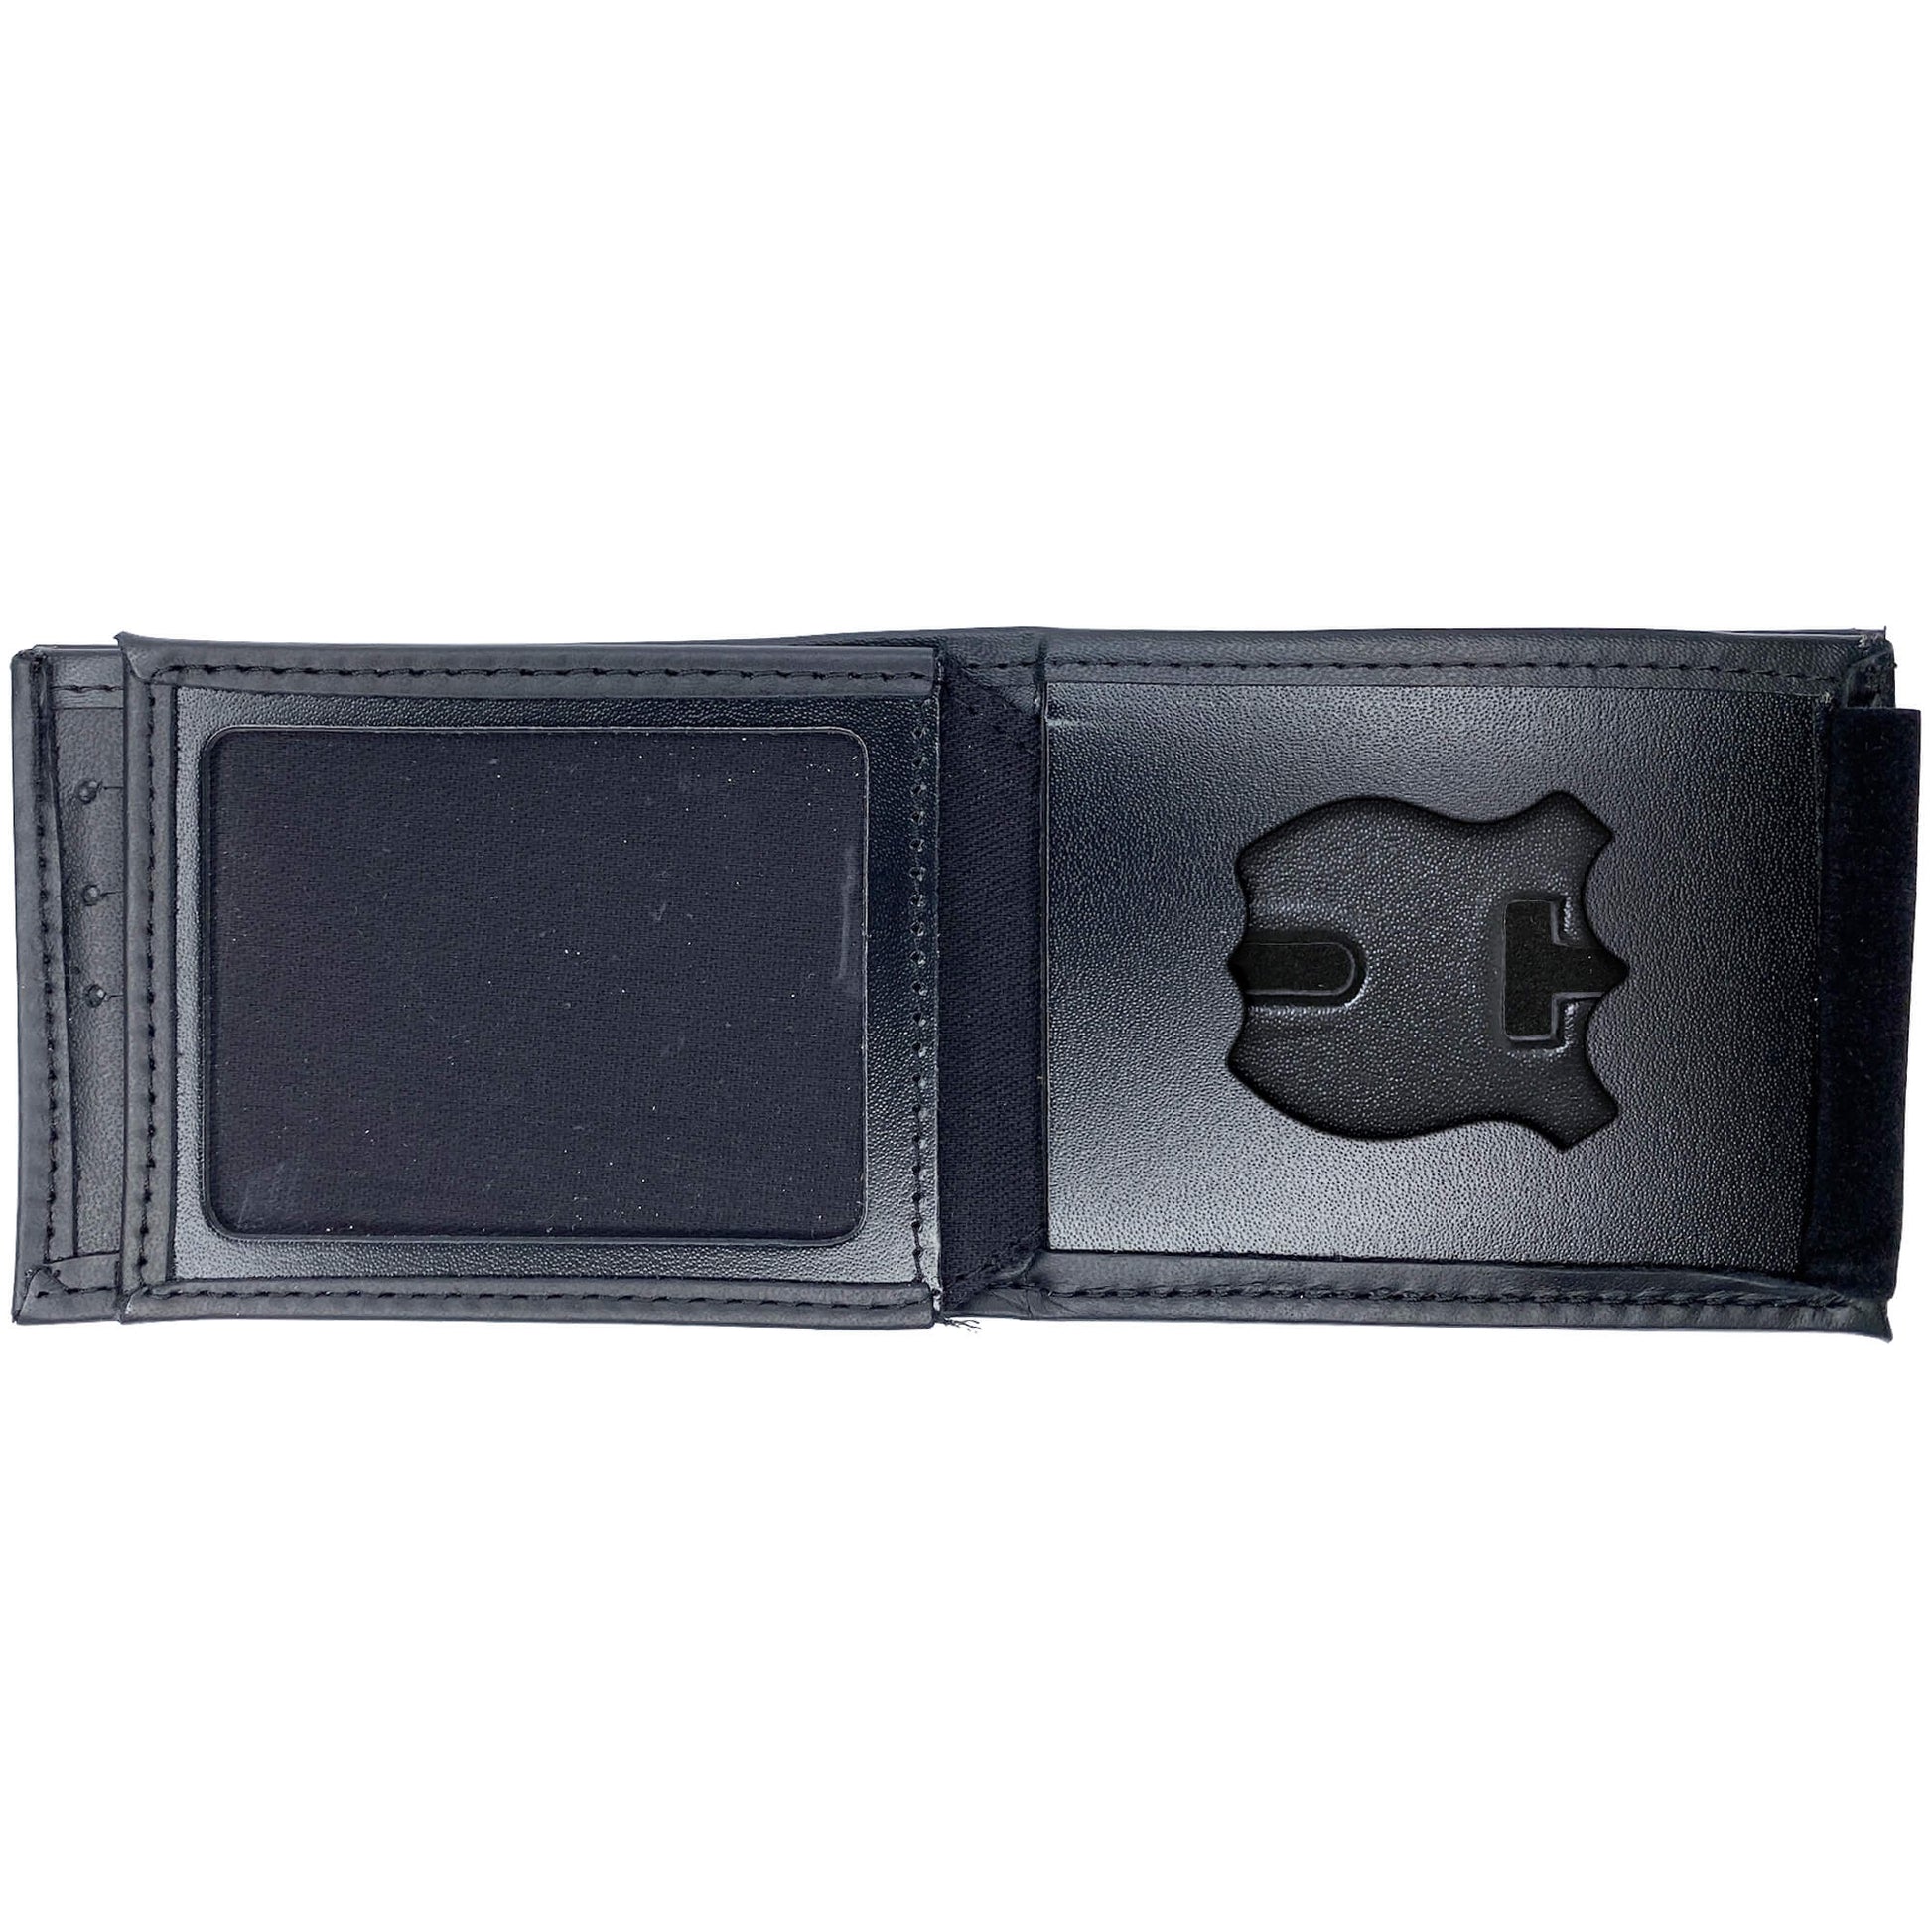 OPP Ontario Provincial Police Hidden Badge Wallet-Perfect Fit-911 Duty Gear Canada